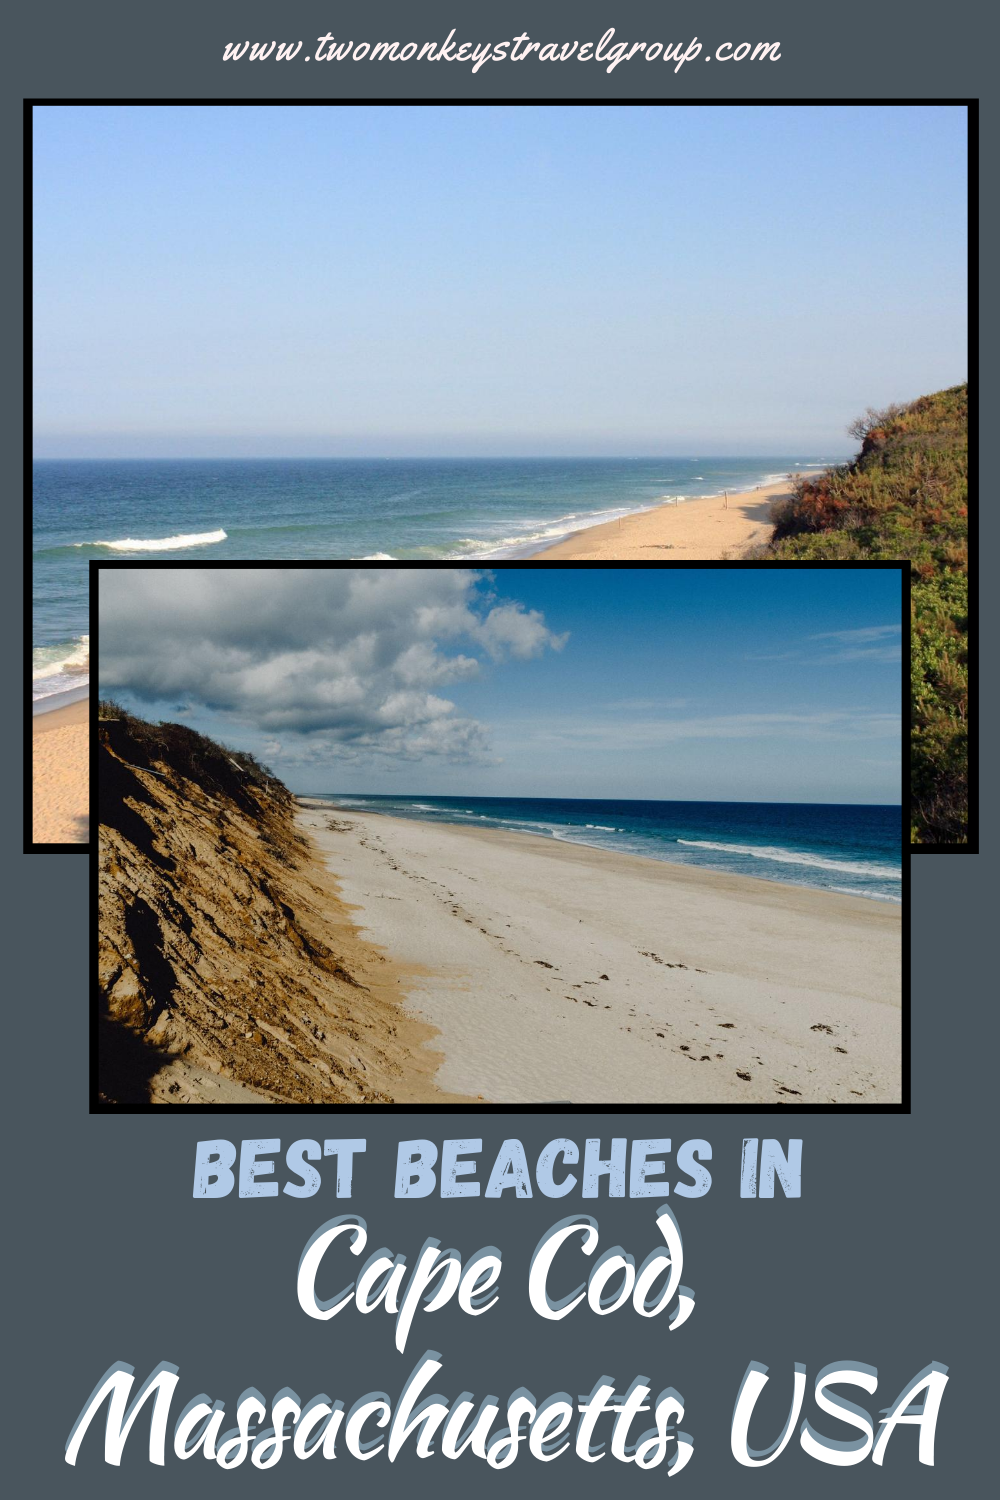 The Best Beaches in Cape Cod, Massachusetts, USA